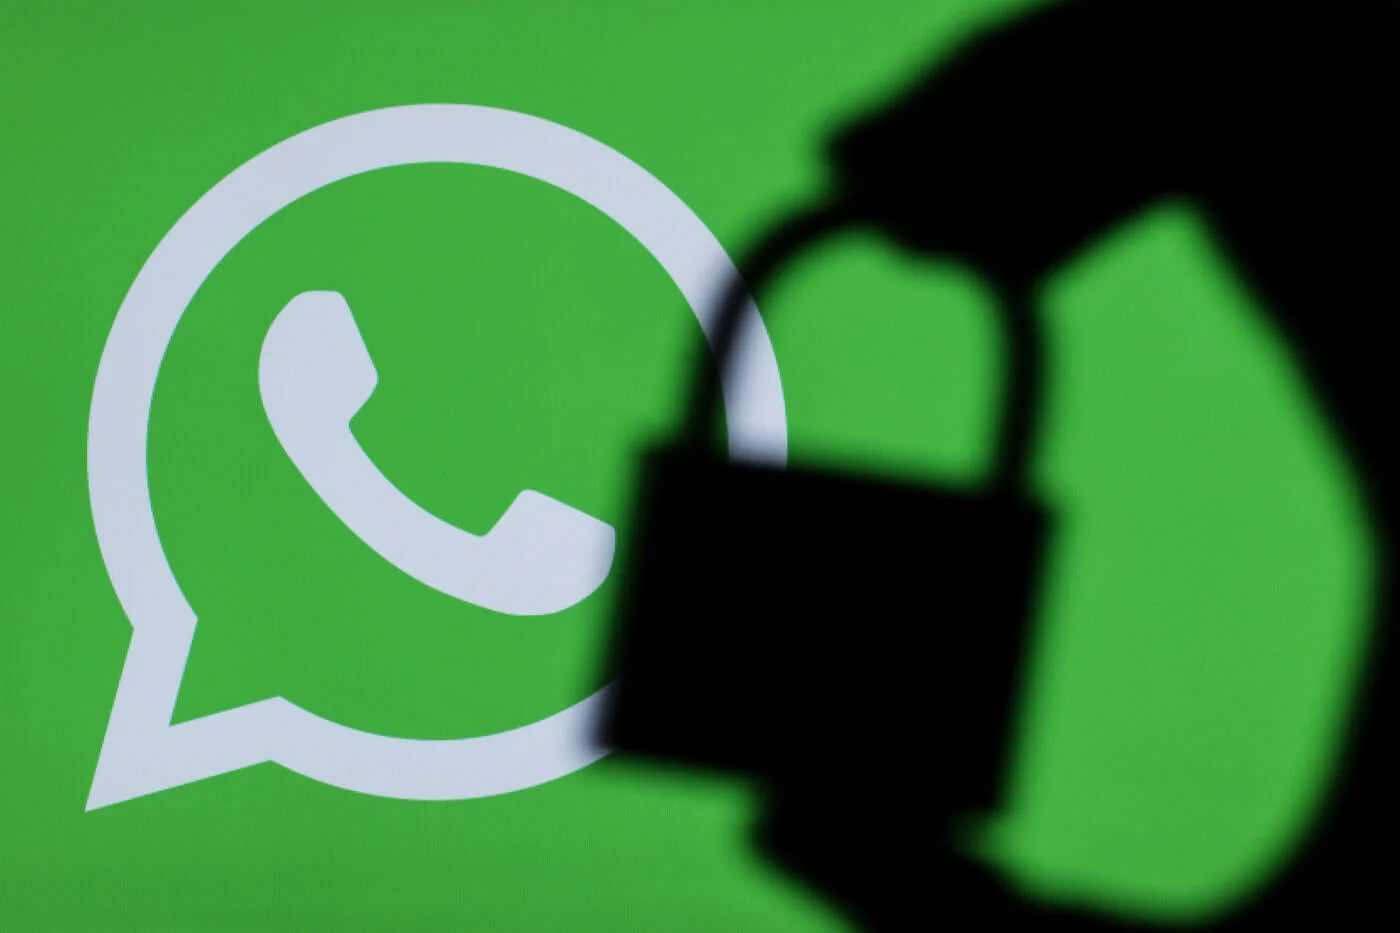 WhatsApp's future in the UK has fallen under question